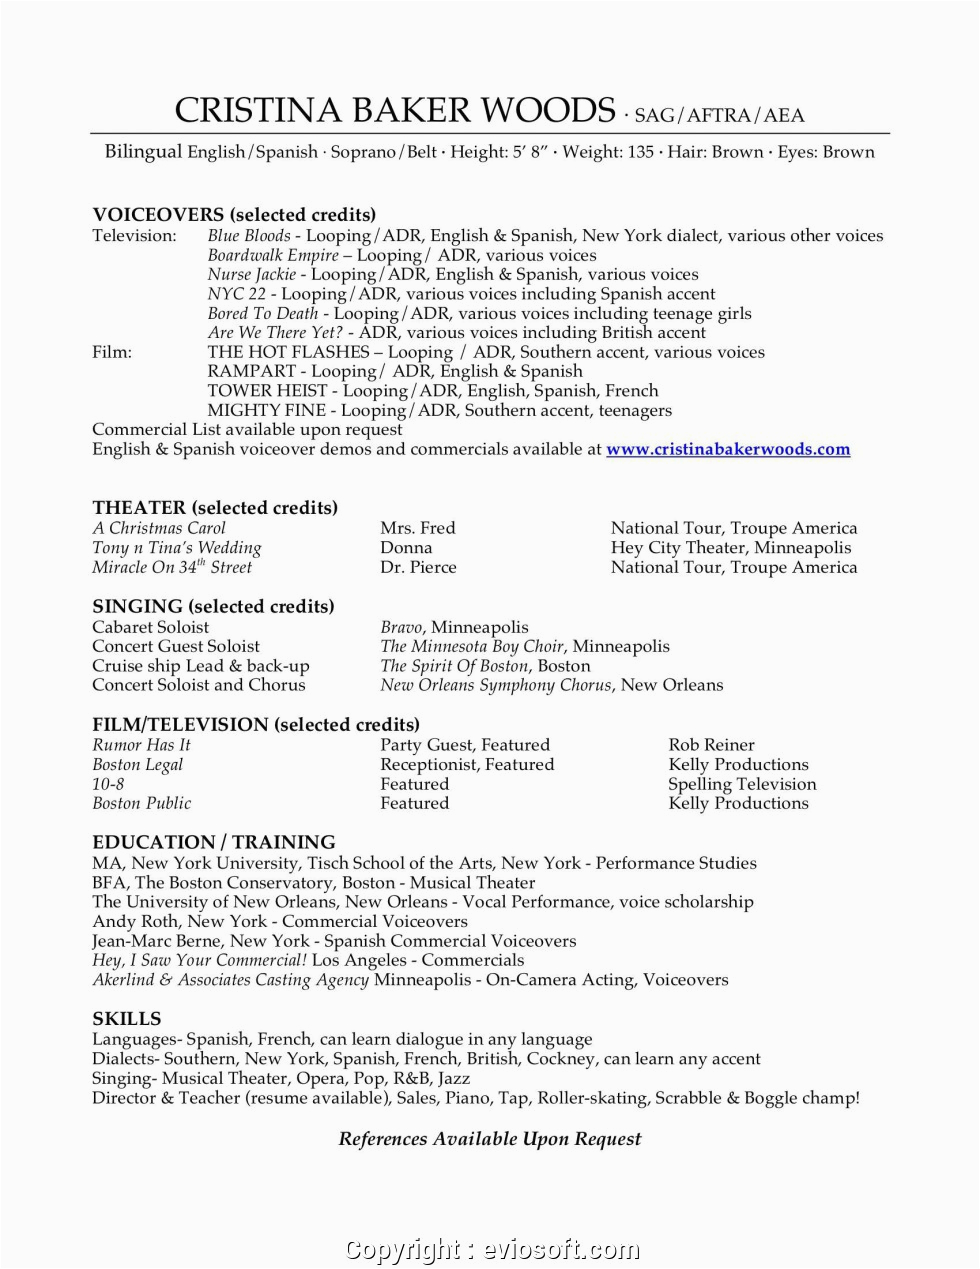 Resume for Tim Hortons Job Sample New Find Sales Resumes Resume Samples for Tim Hortons